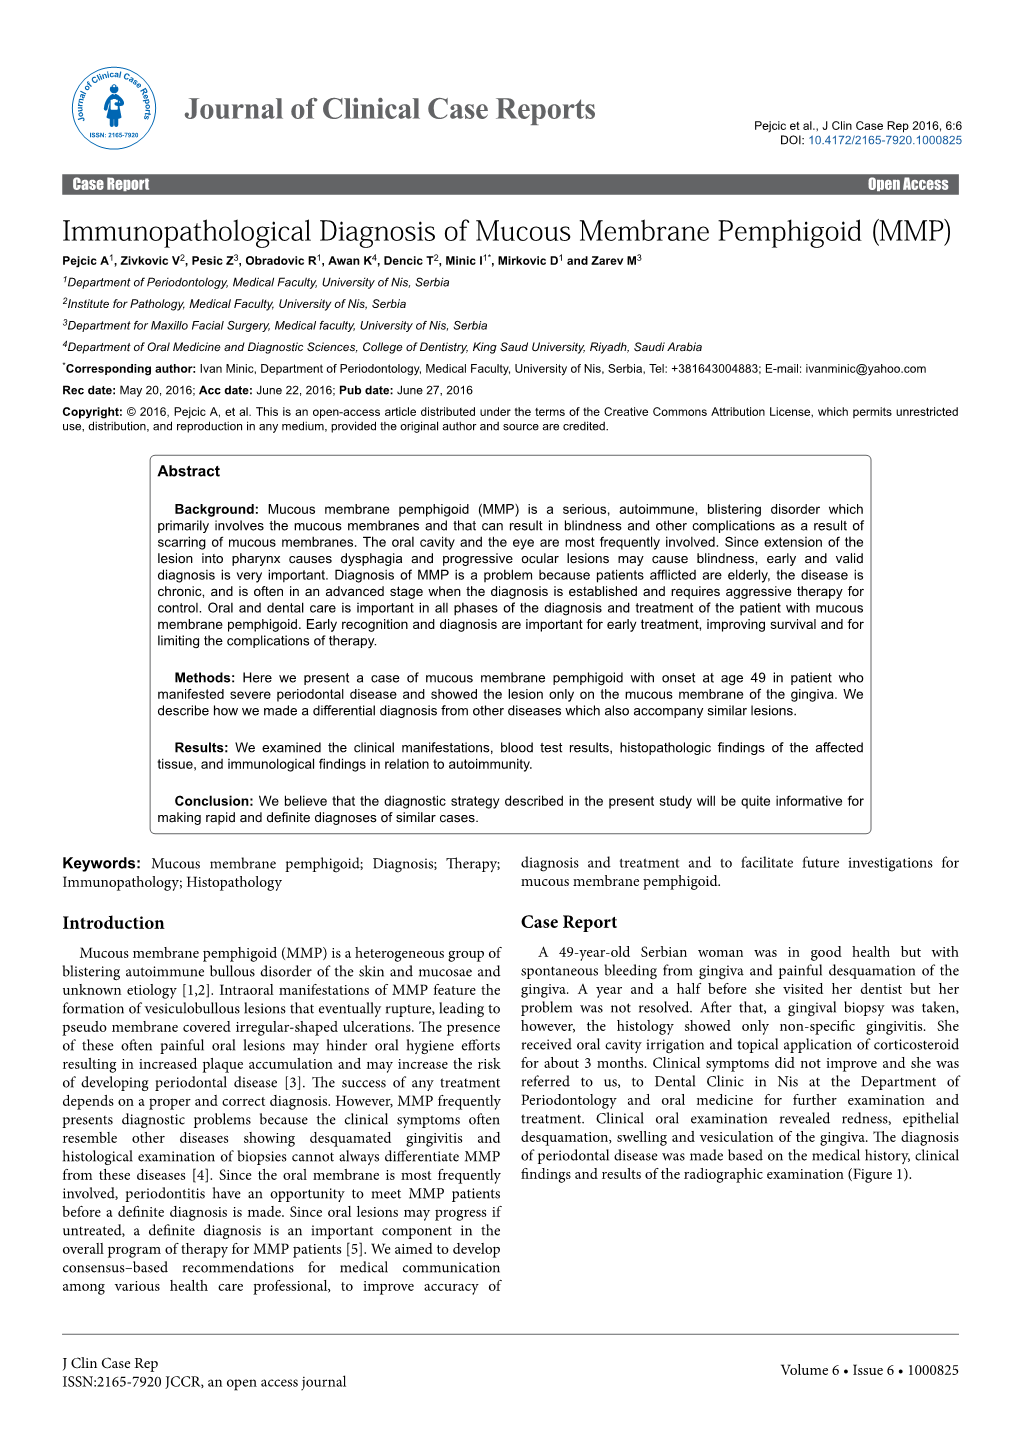 Immunopathological Diagnosis of Mucous Membrane Pemphigoid